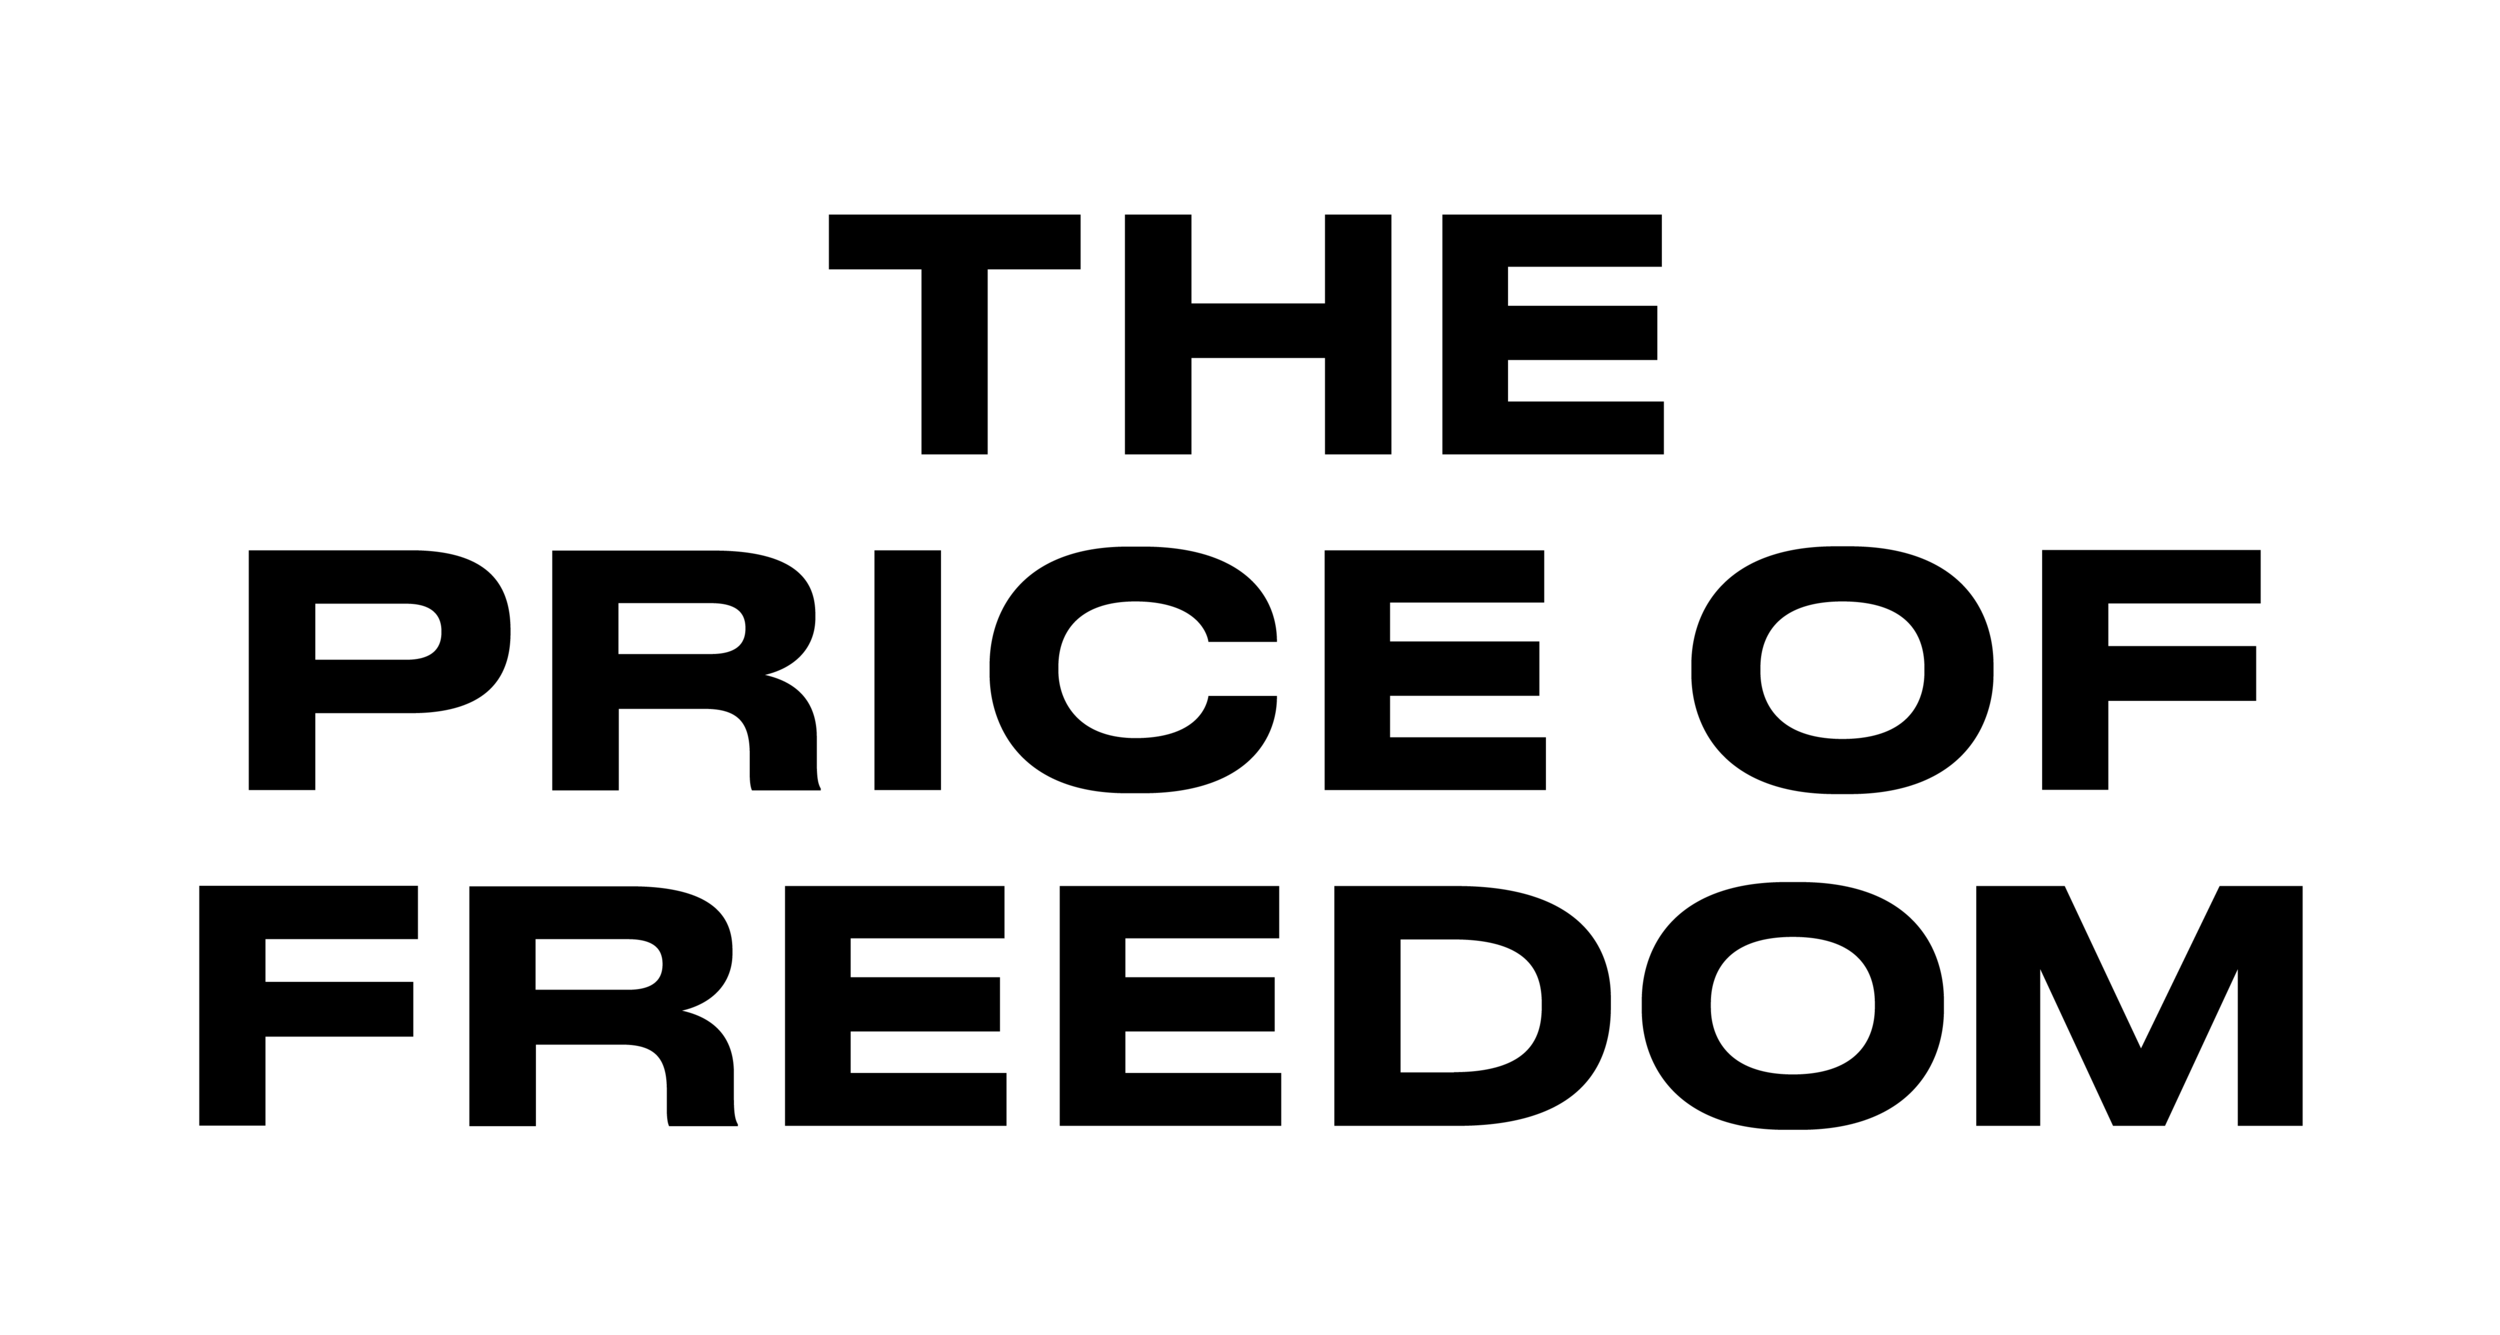 tpof-primary+logo-black-01.png